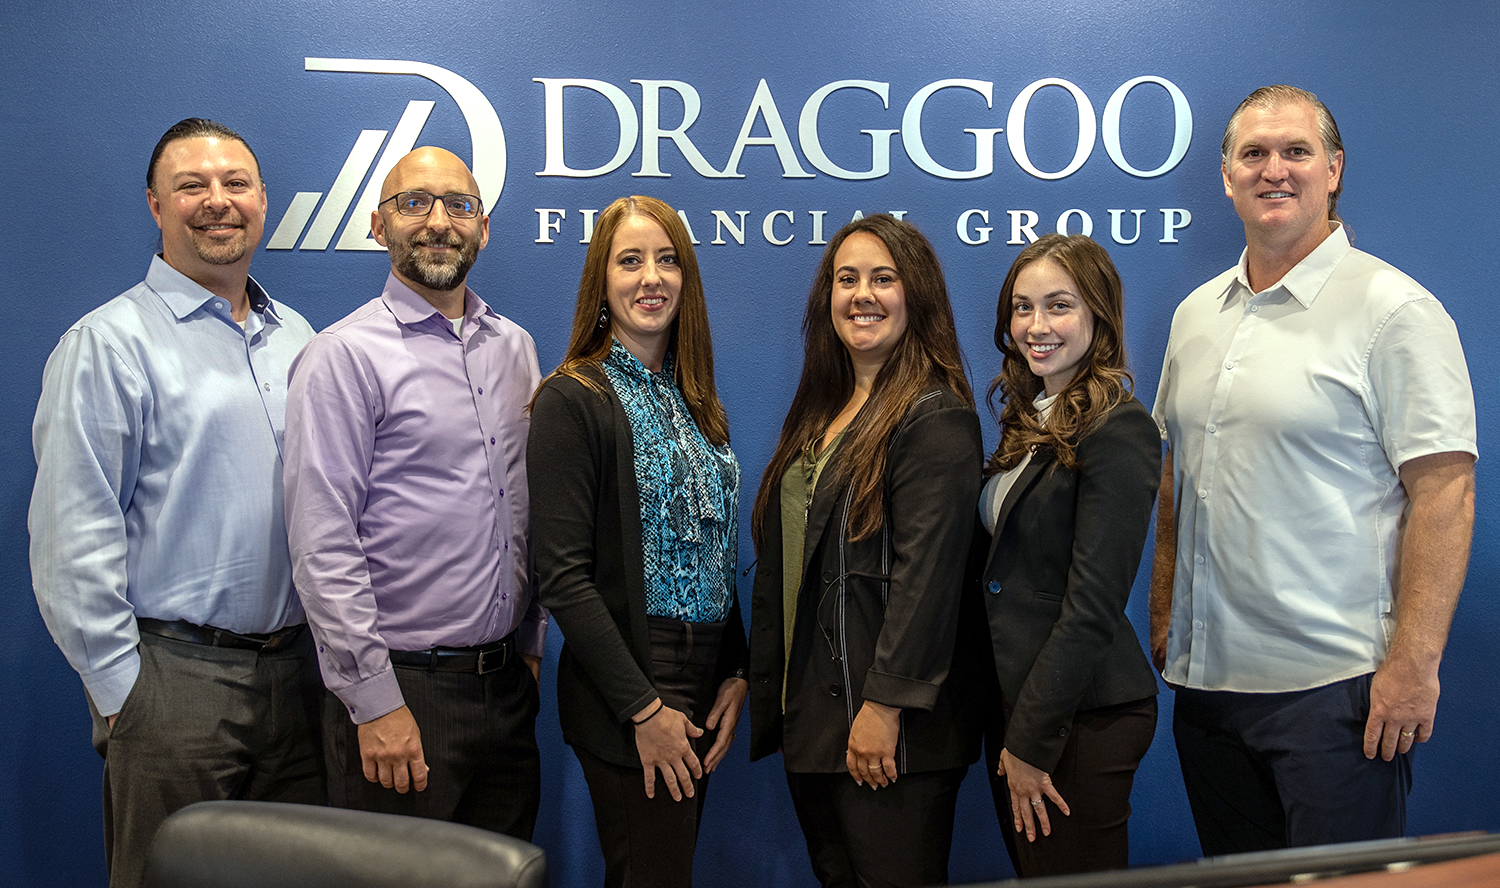 Draggoo Group Photo